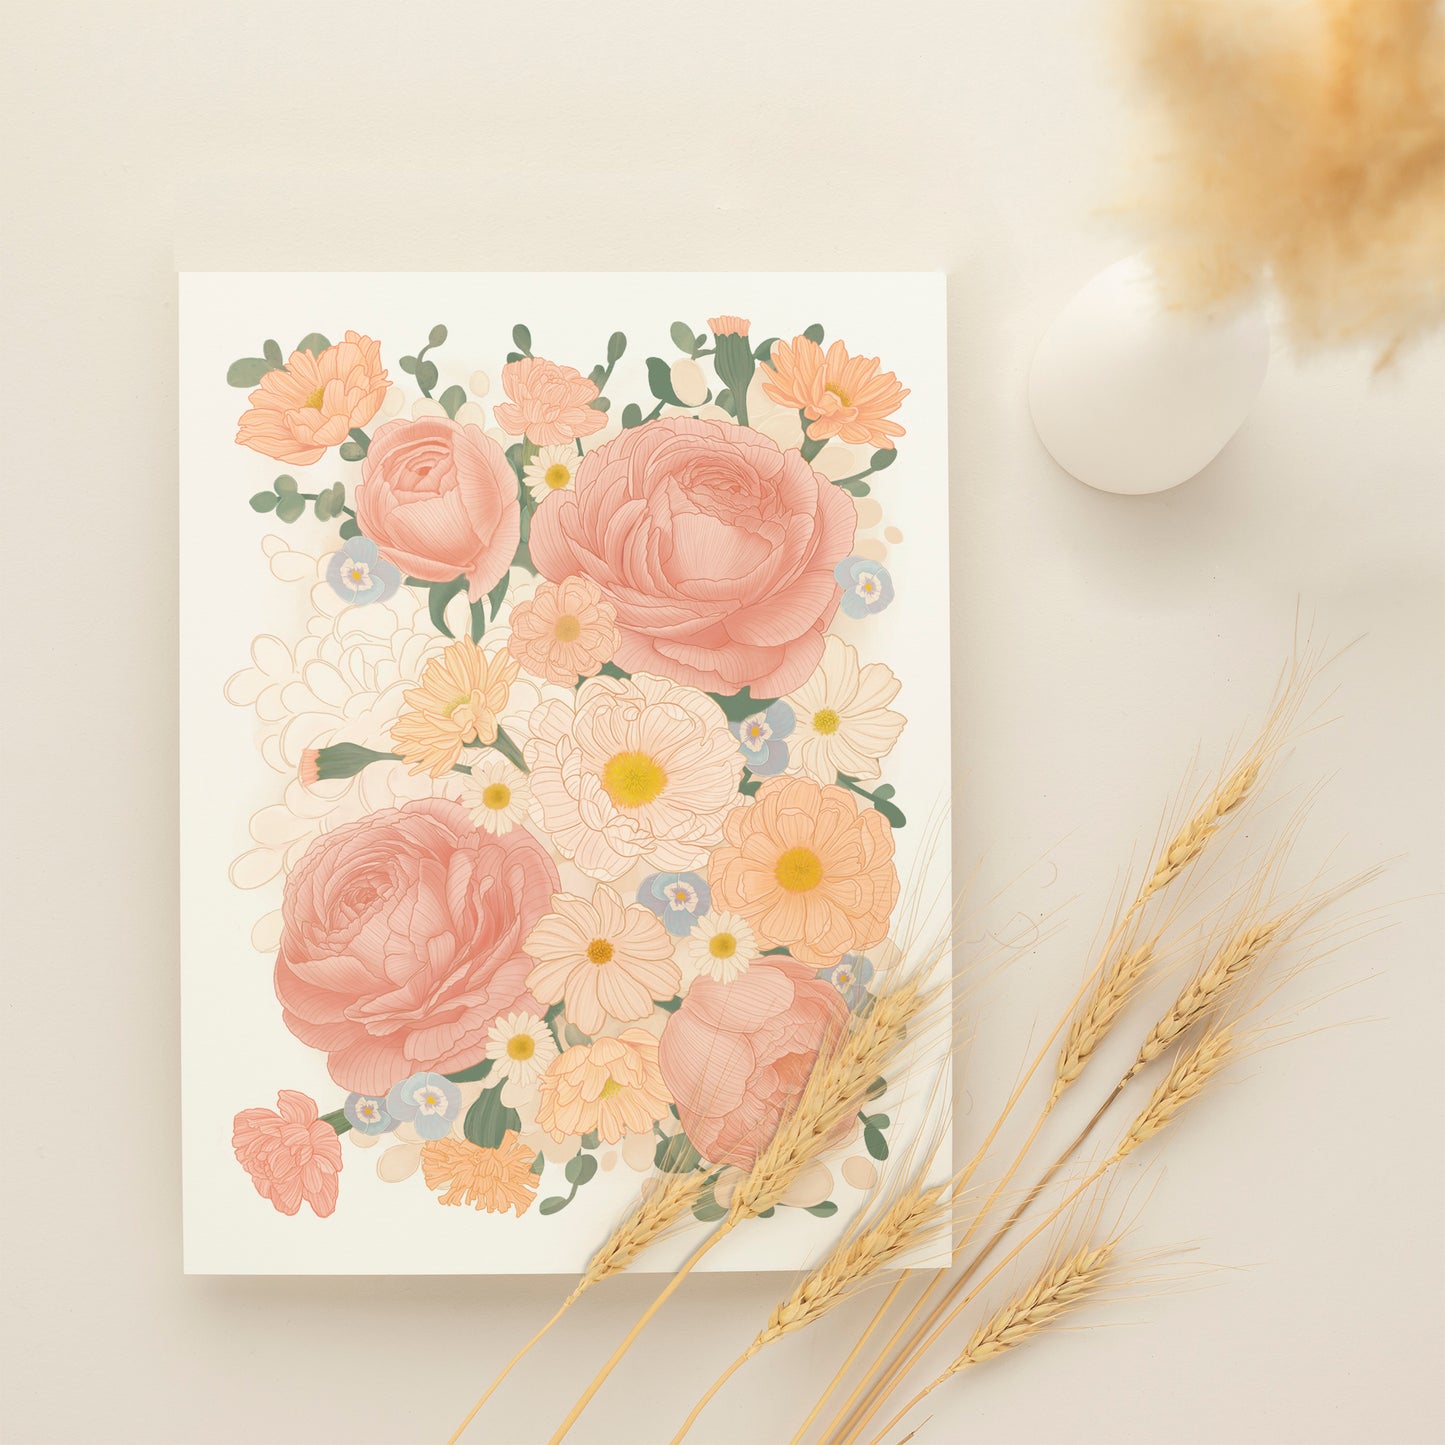 Fall Bouquet Greeting card/ Vintage flower card/ Flower Illustration/ Botanical Art/ Floral Art Print / A2 Size